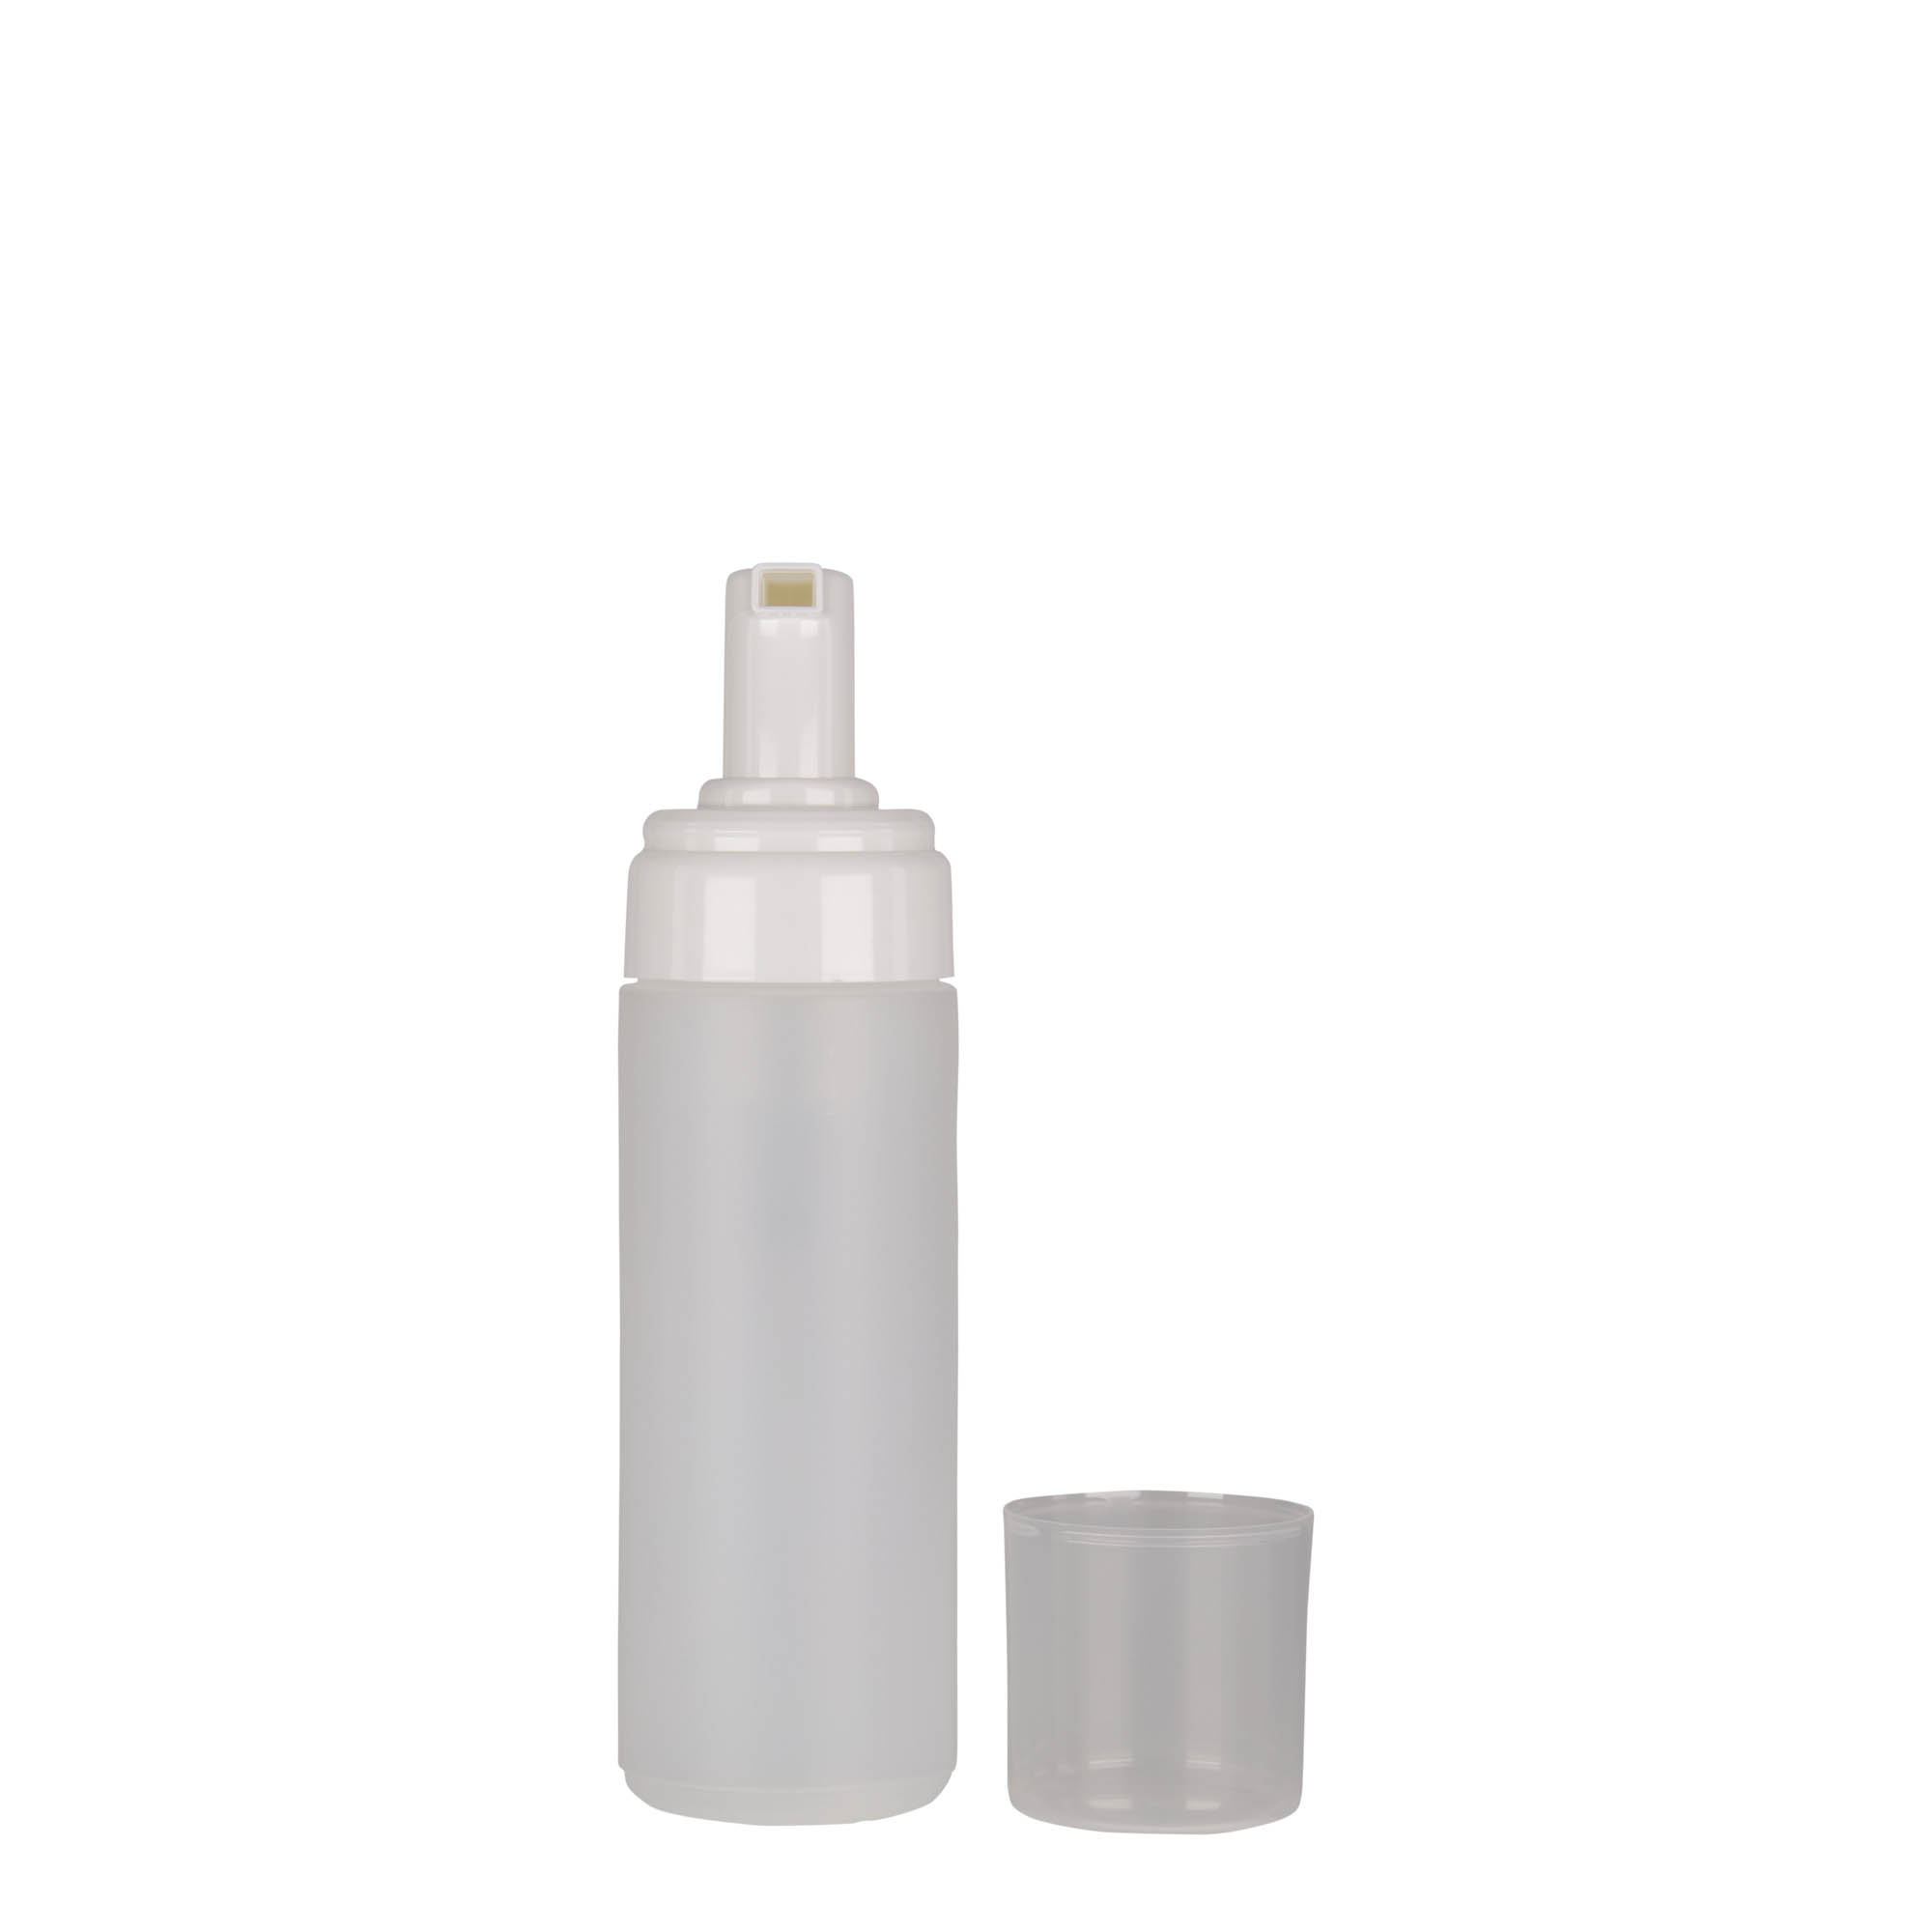 150 ml dispenser bottle 'Foamer', PE plastic, natural, closure: screw cap